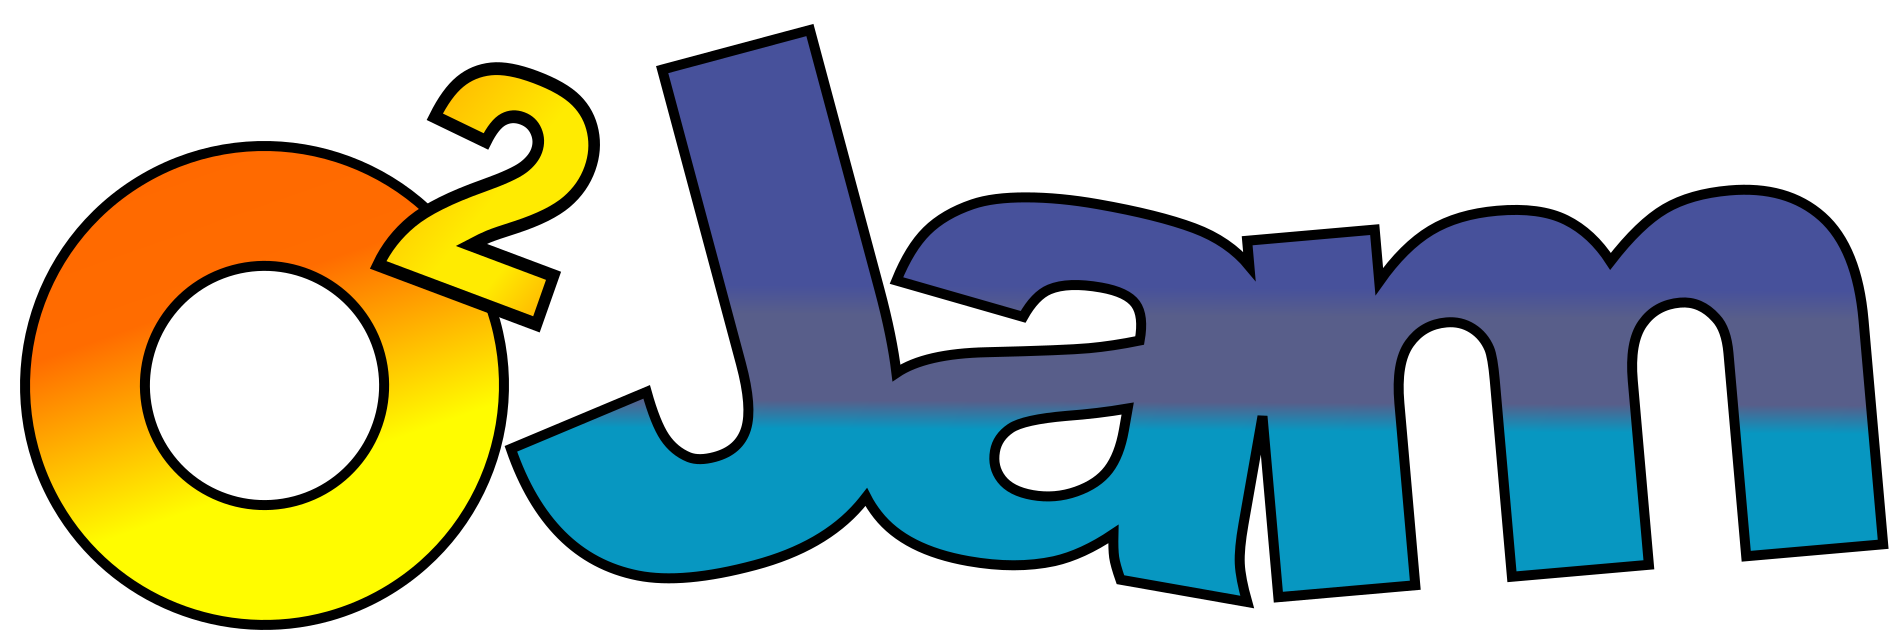 O2Jam-logo.png